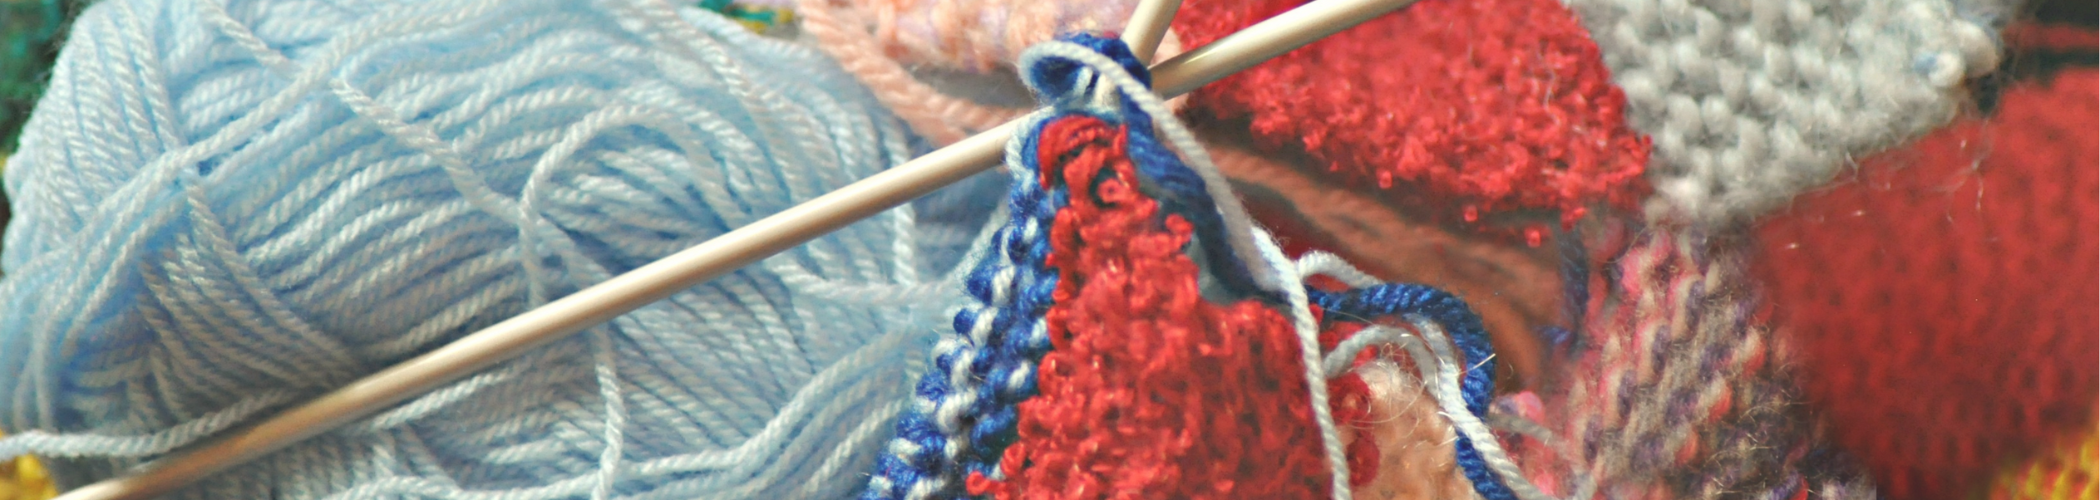 K=Yarn and knitting needles